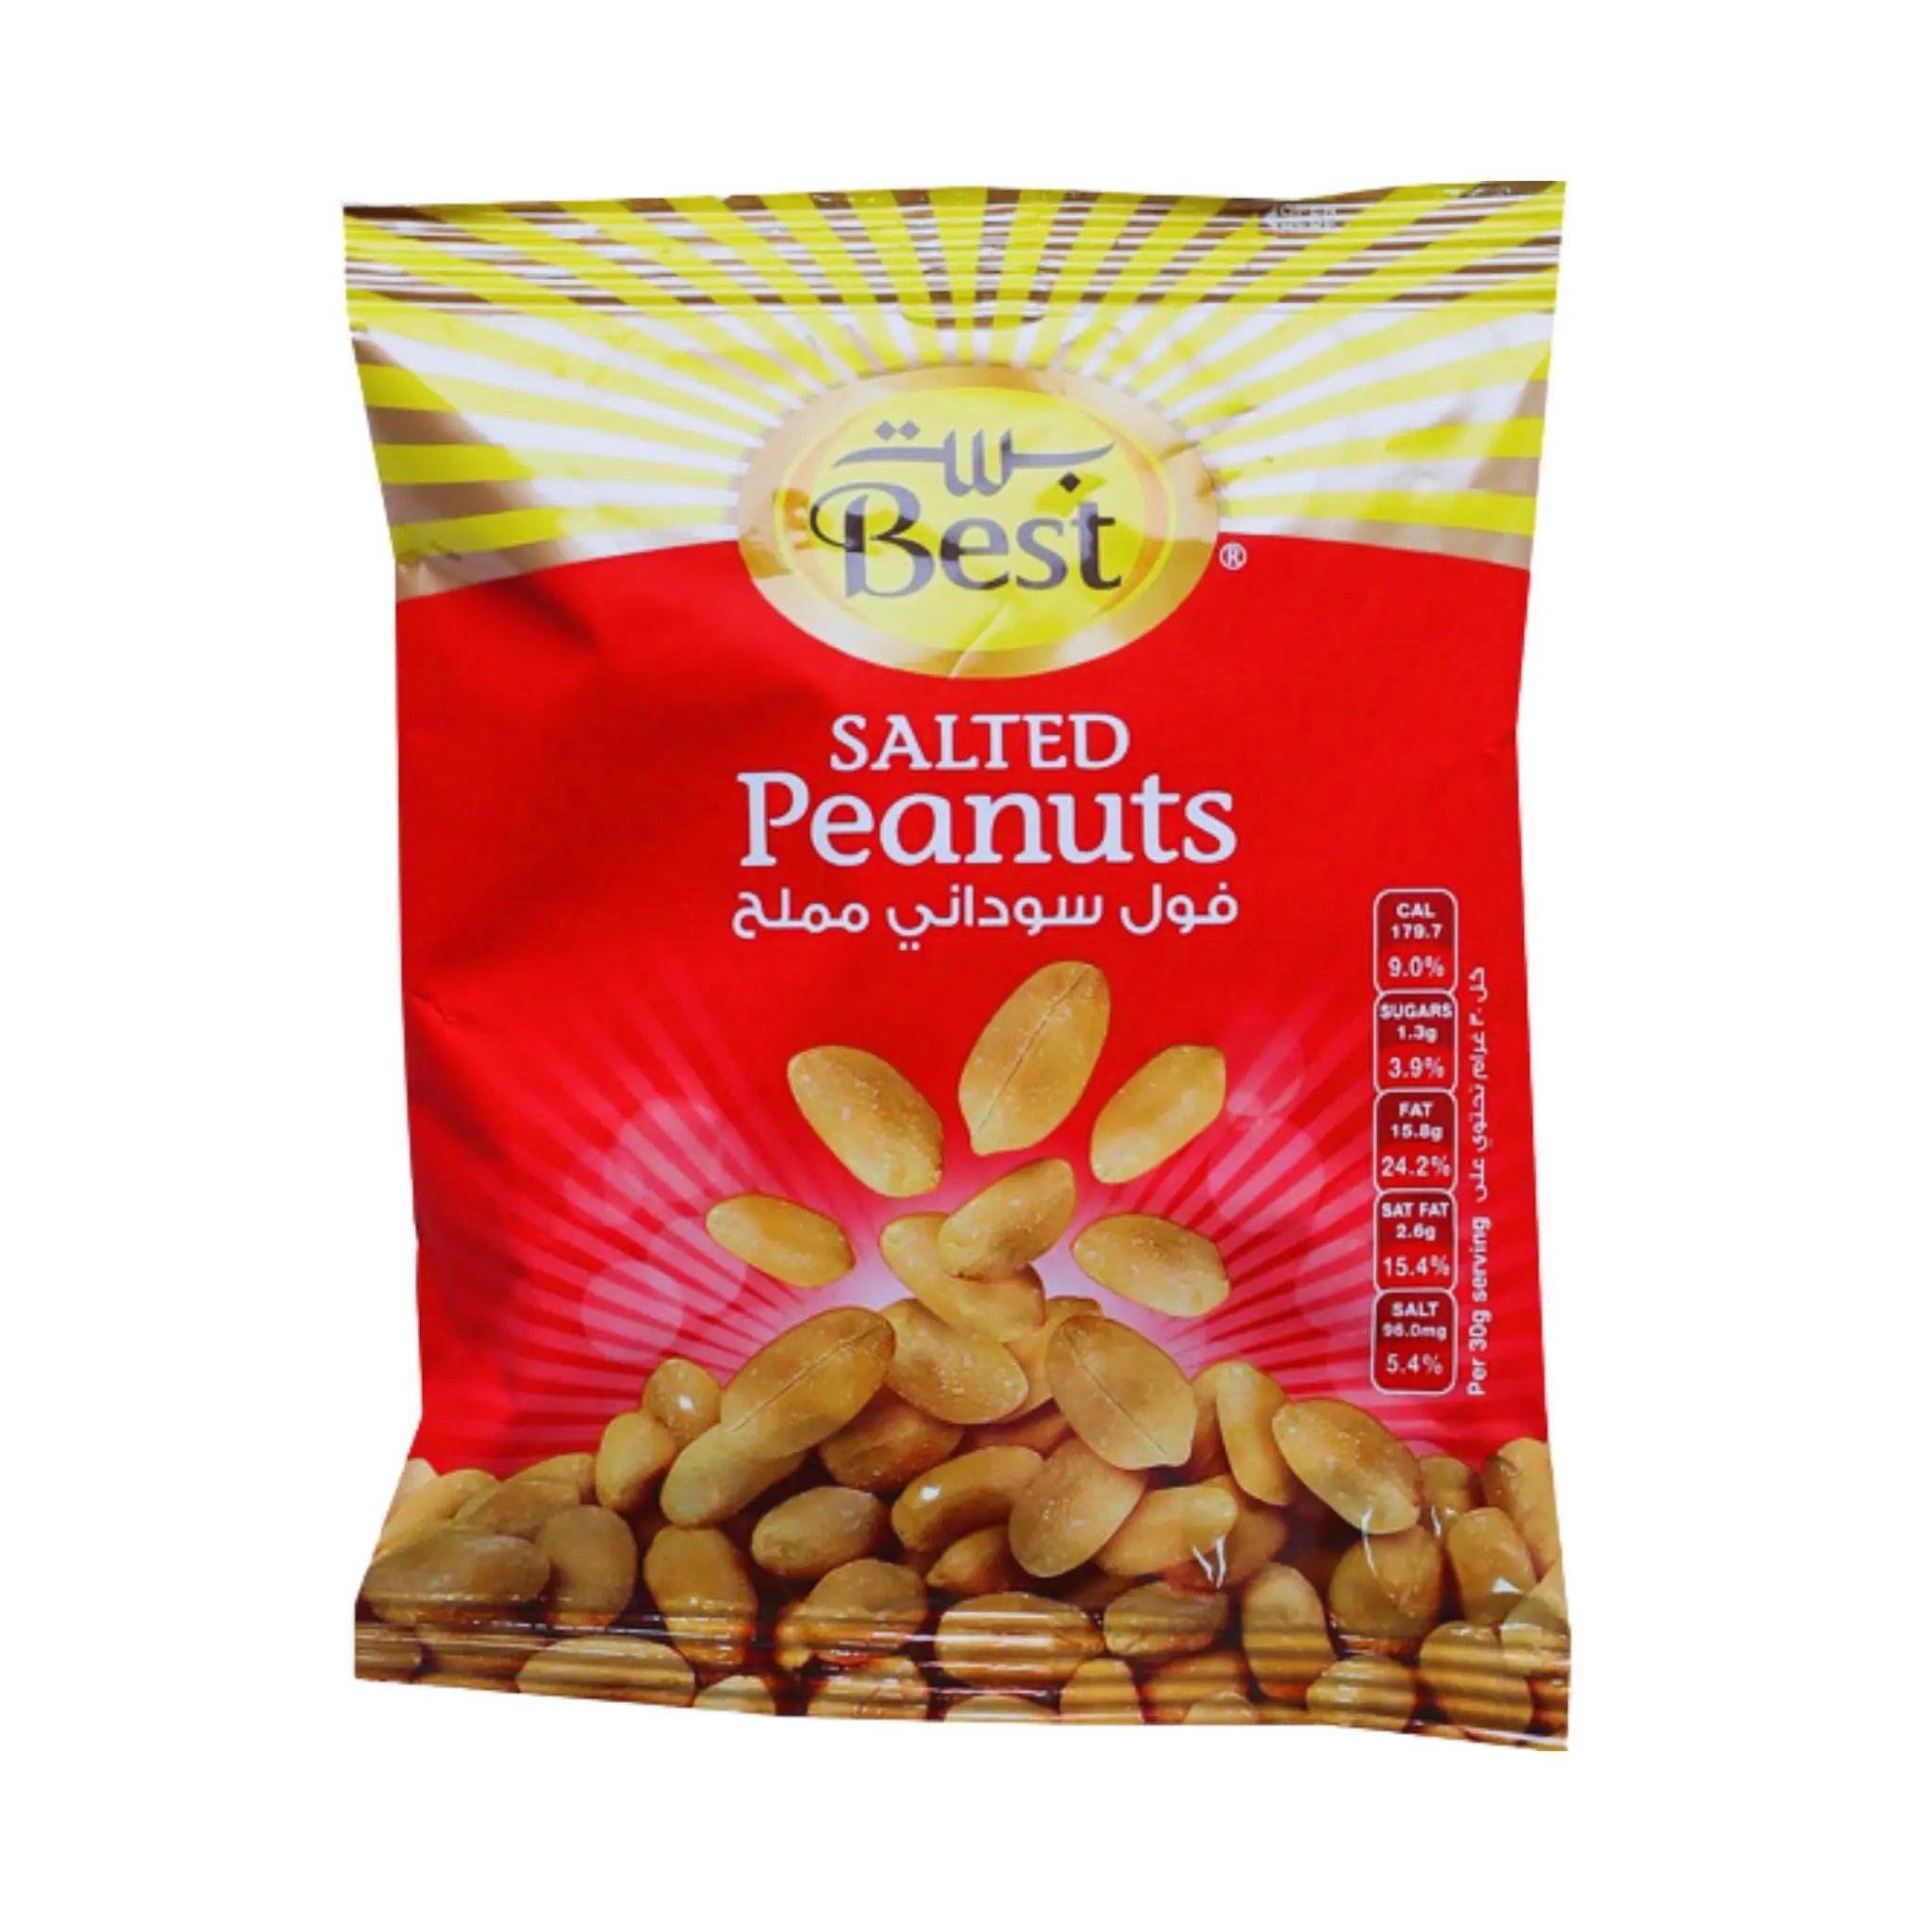 Best Salted Peanuts - 6x12x50g (1 carton) Marino.AE